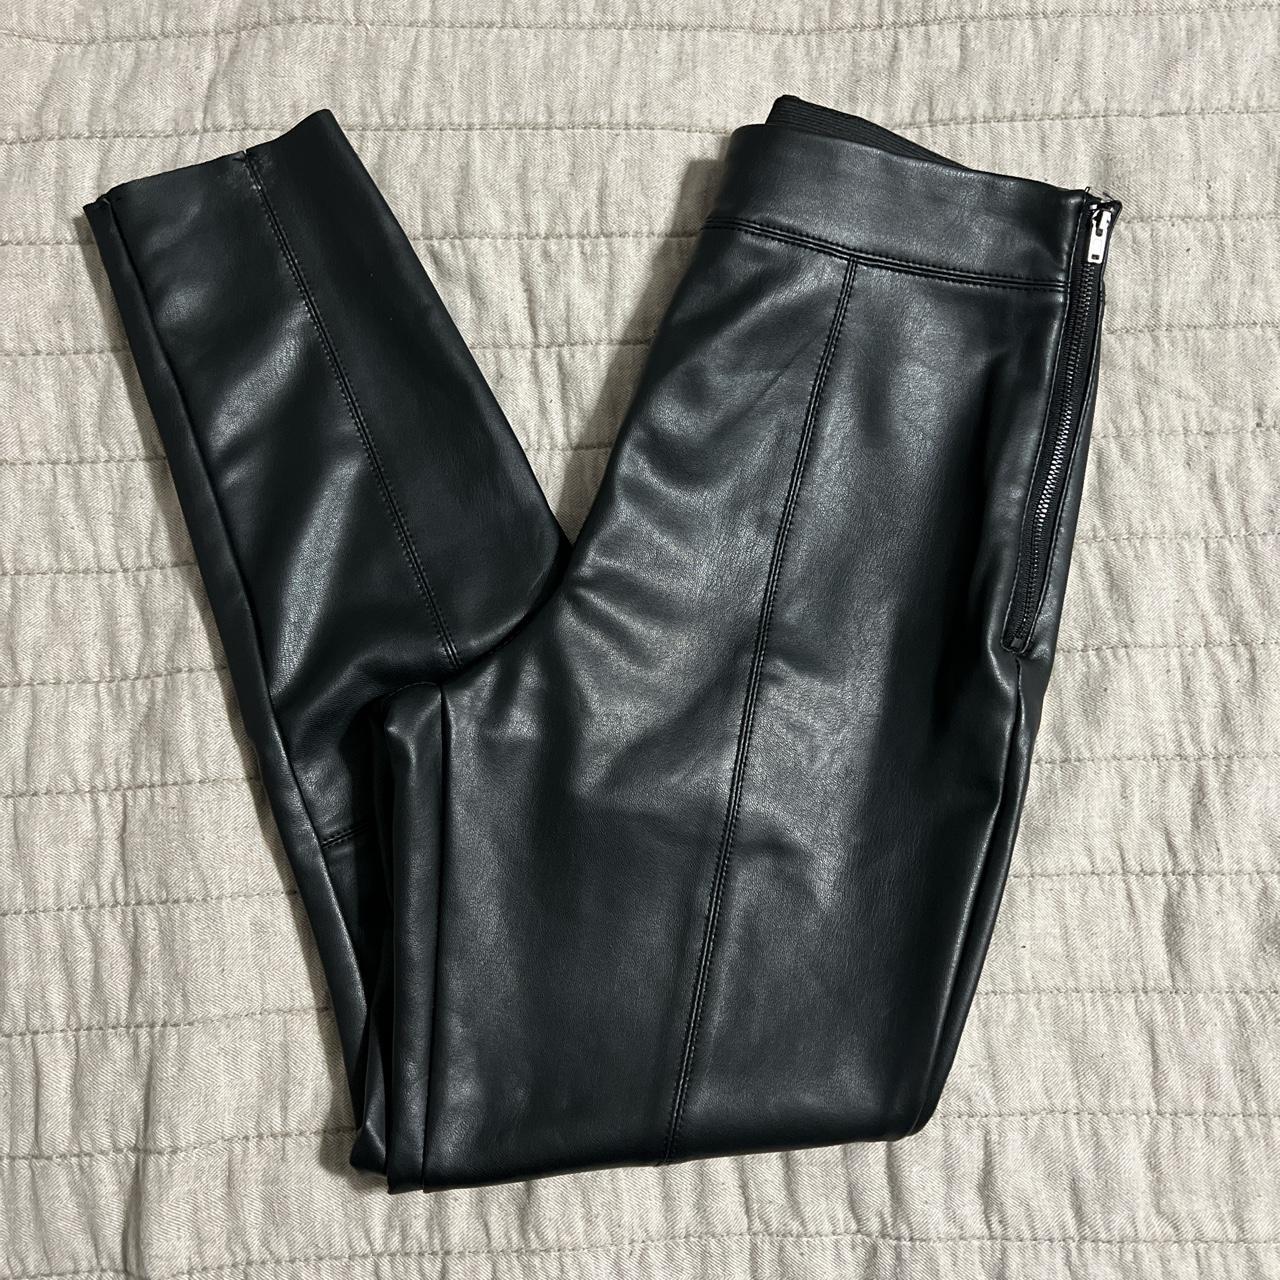 Topshop petite faux leather leggings in size 10. - Depop